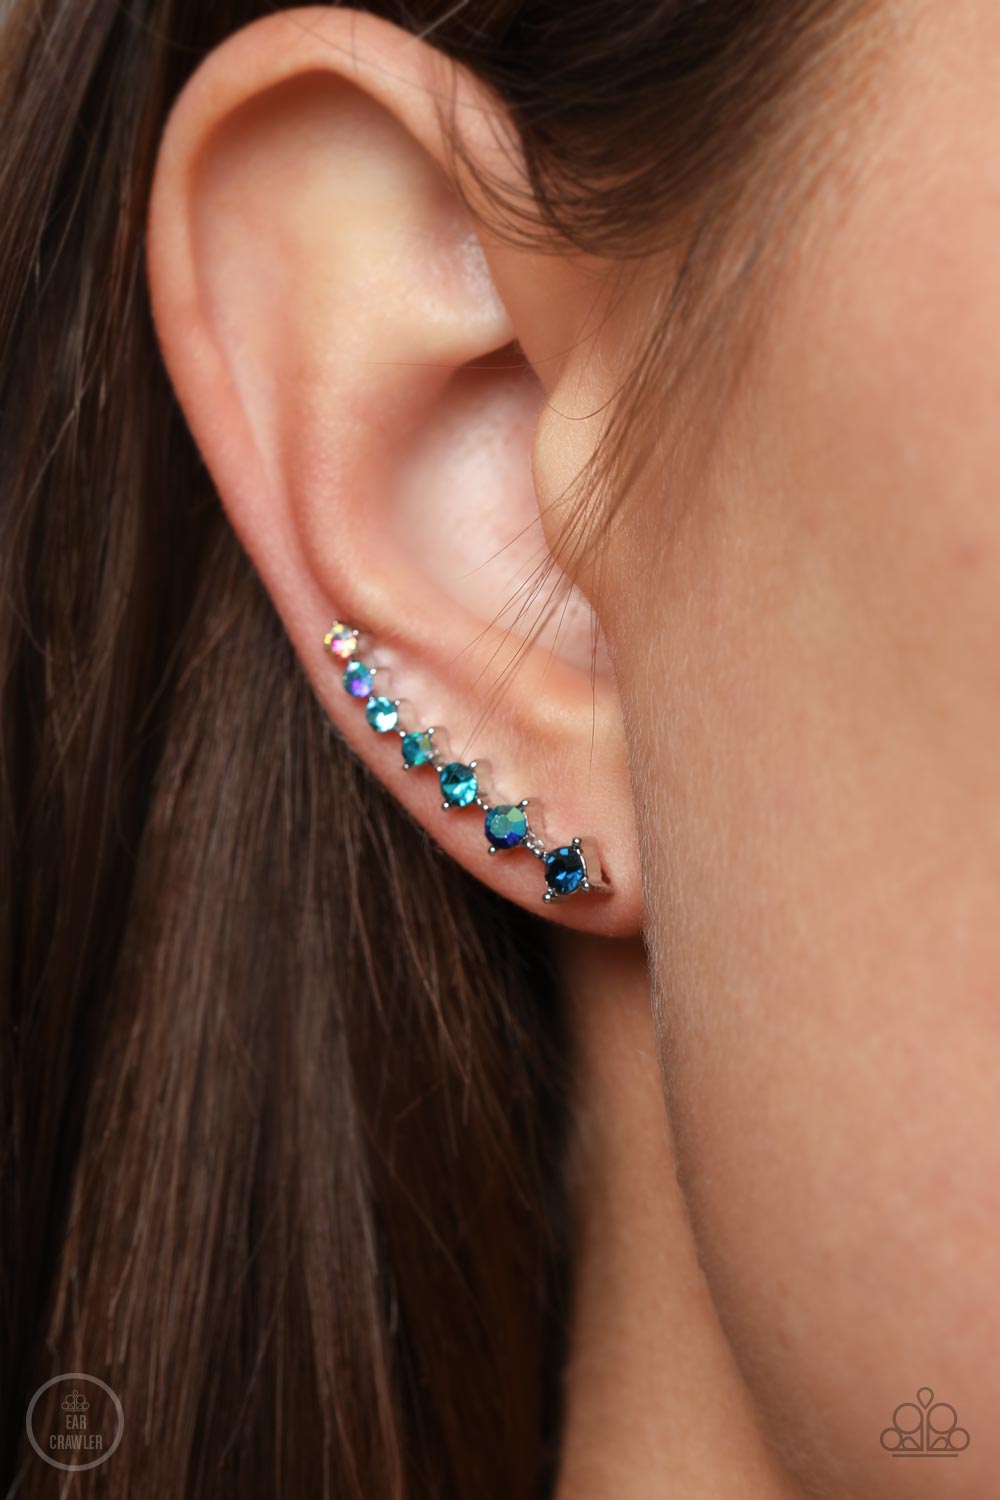 STARLIGHT Show Blue Rhinestone Ear Crawler Earrings - Paparazzi Accessories- lightbox - CarasShop.com - $5 Jewelry by Cara Jewels